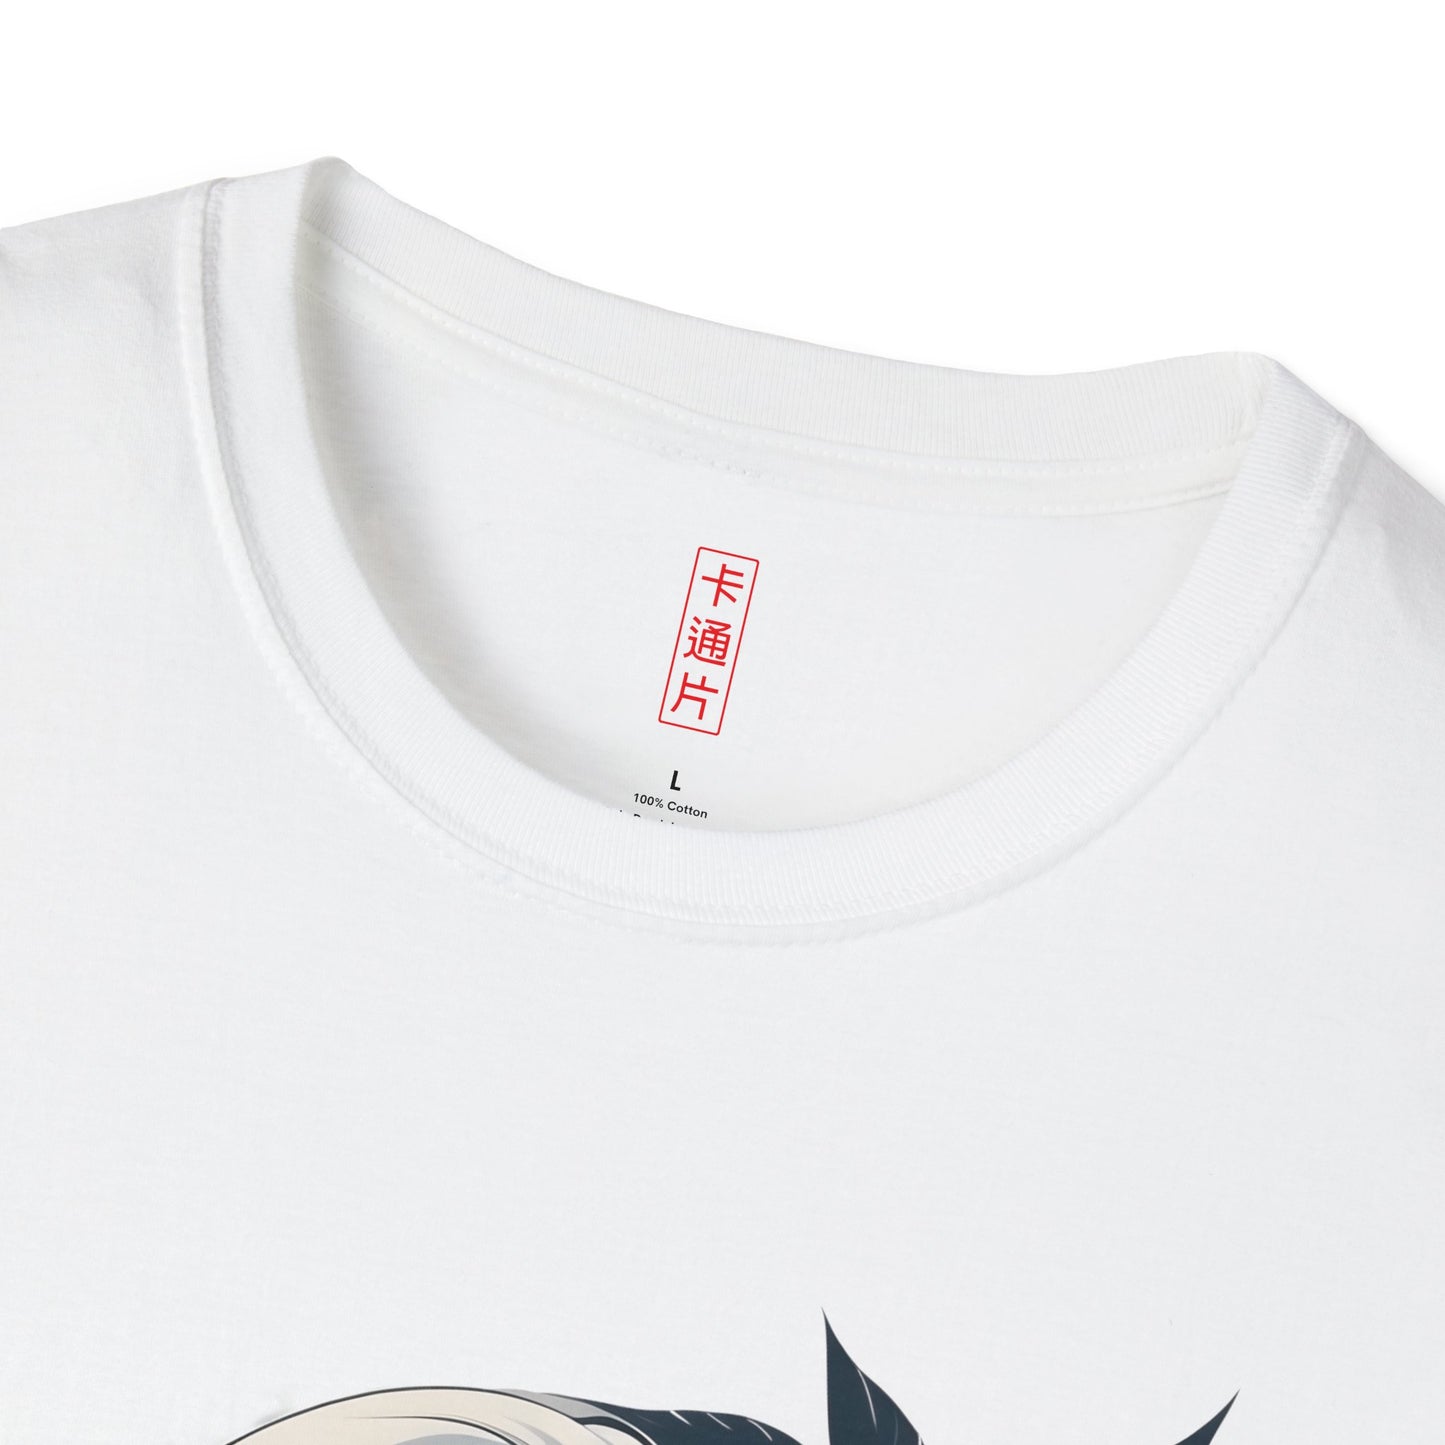 Kǎtōng Piàn - California Love Collection - 003 - Unisex Softstyle T-Shirt Printify